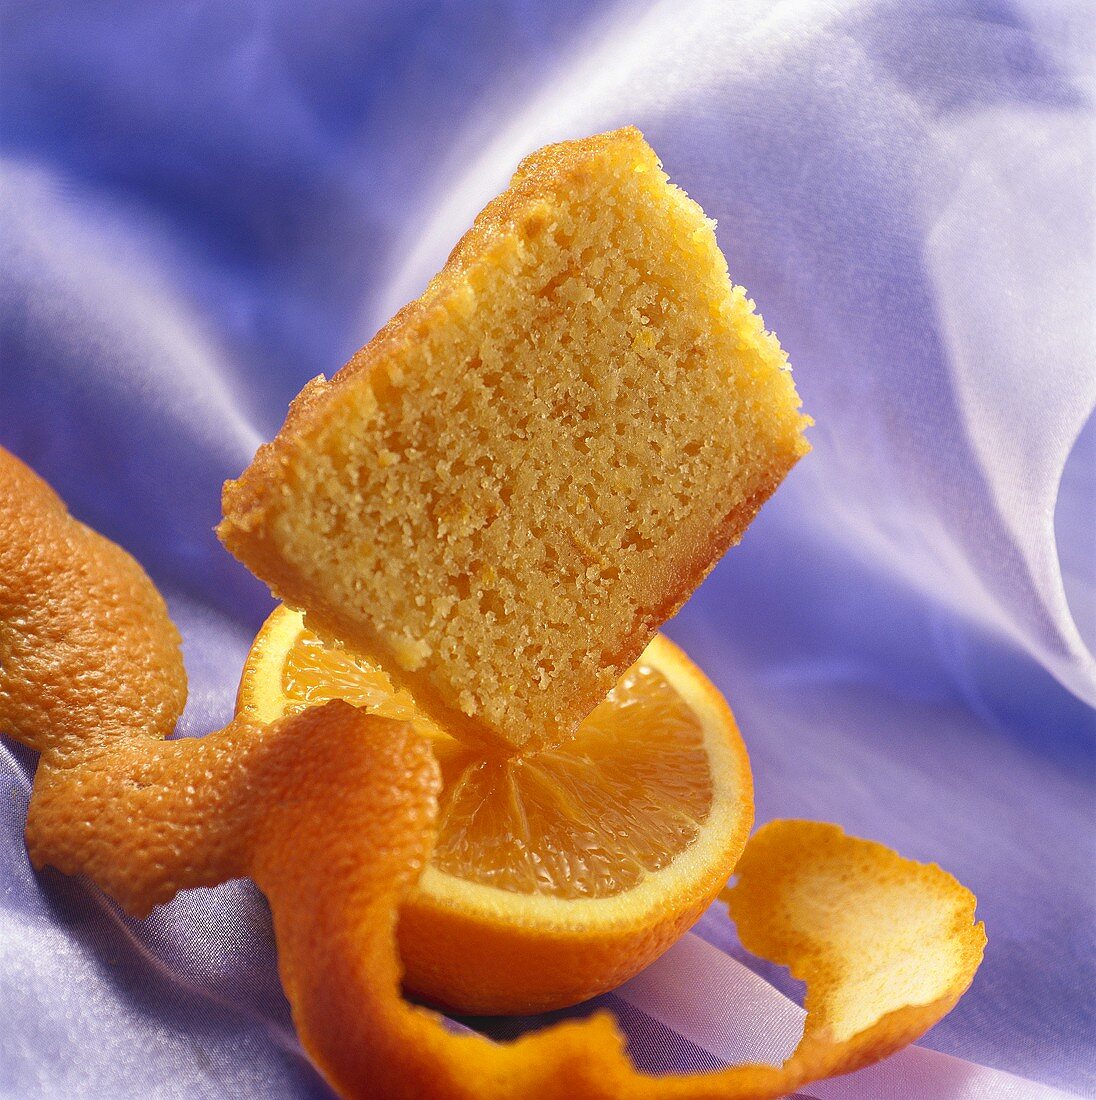 Piece of orange cake on half an orange